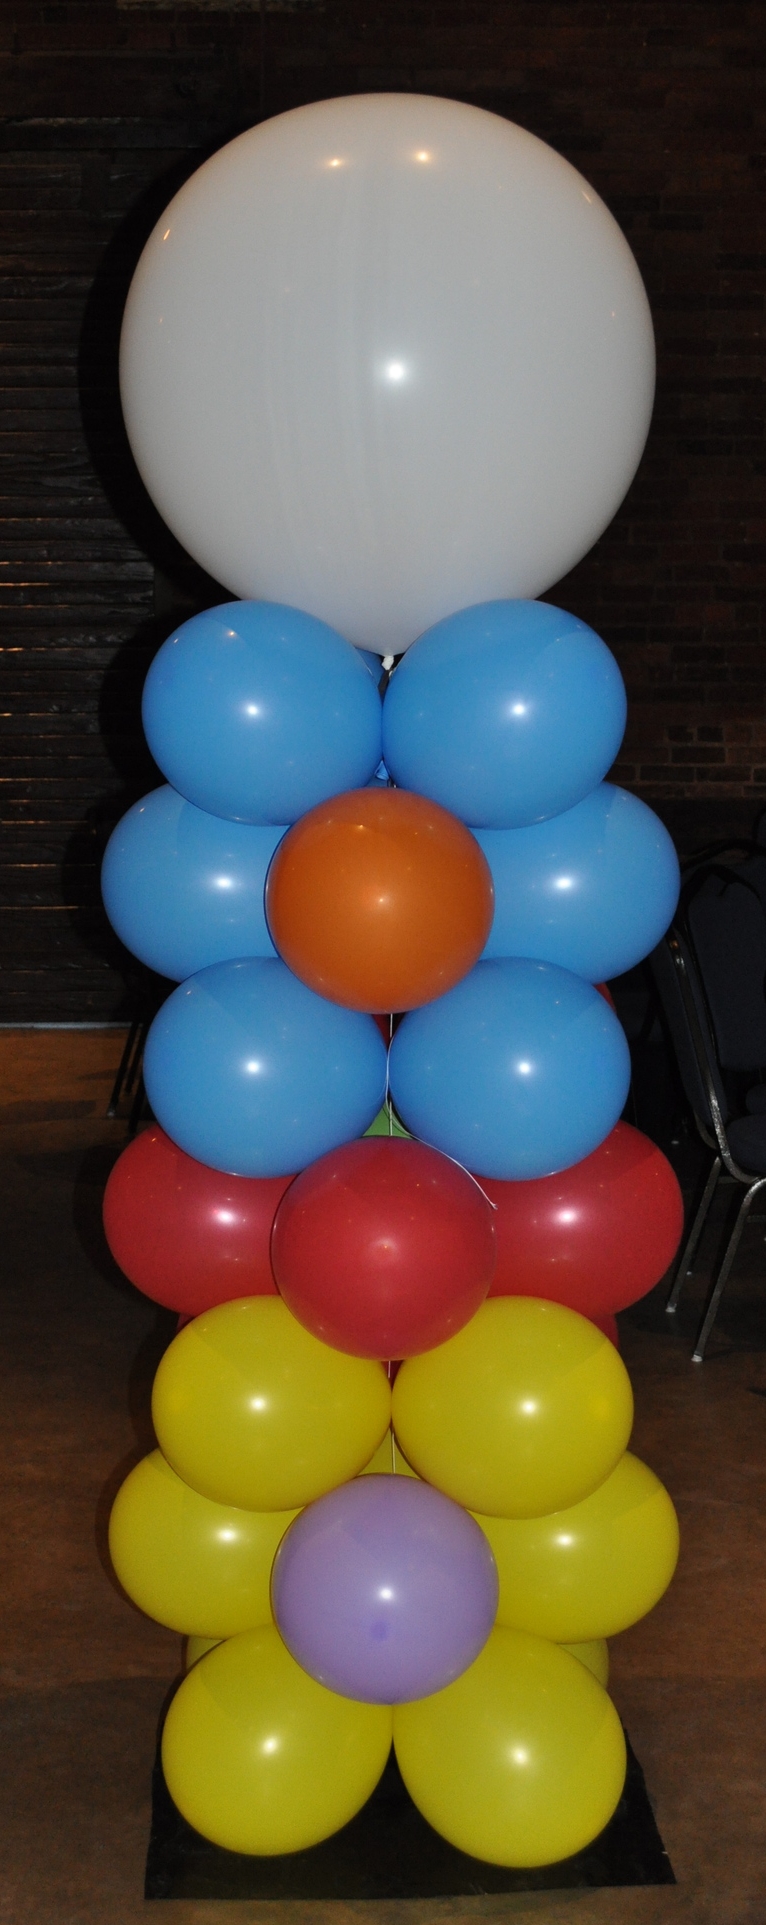 Circus-themed prom balloon column